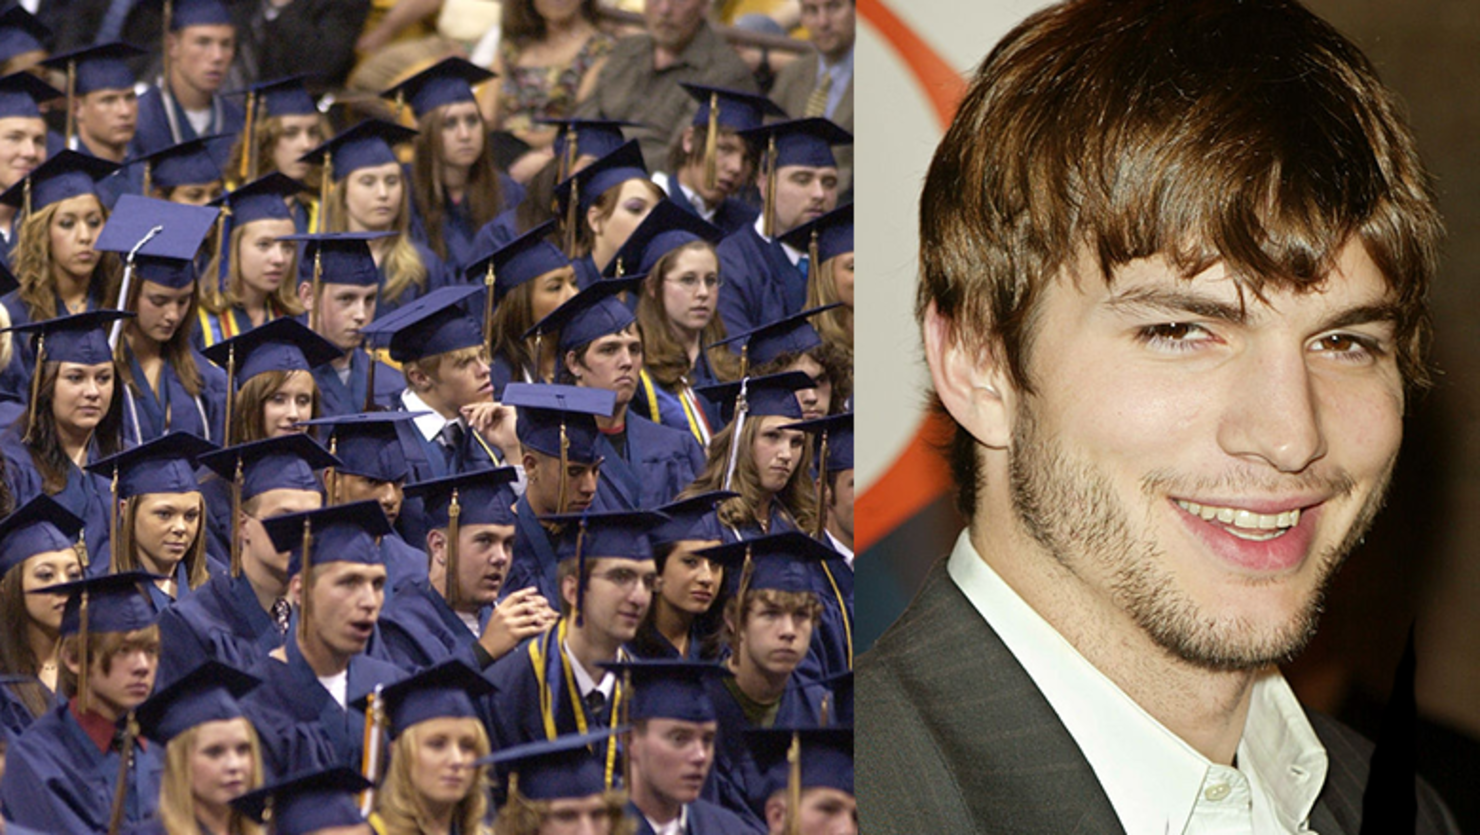 high-school-principal-plagiarizes-ashton-kutcher-in-graduation-speech